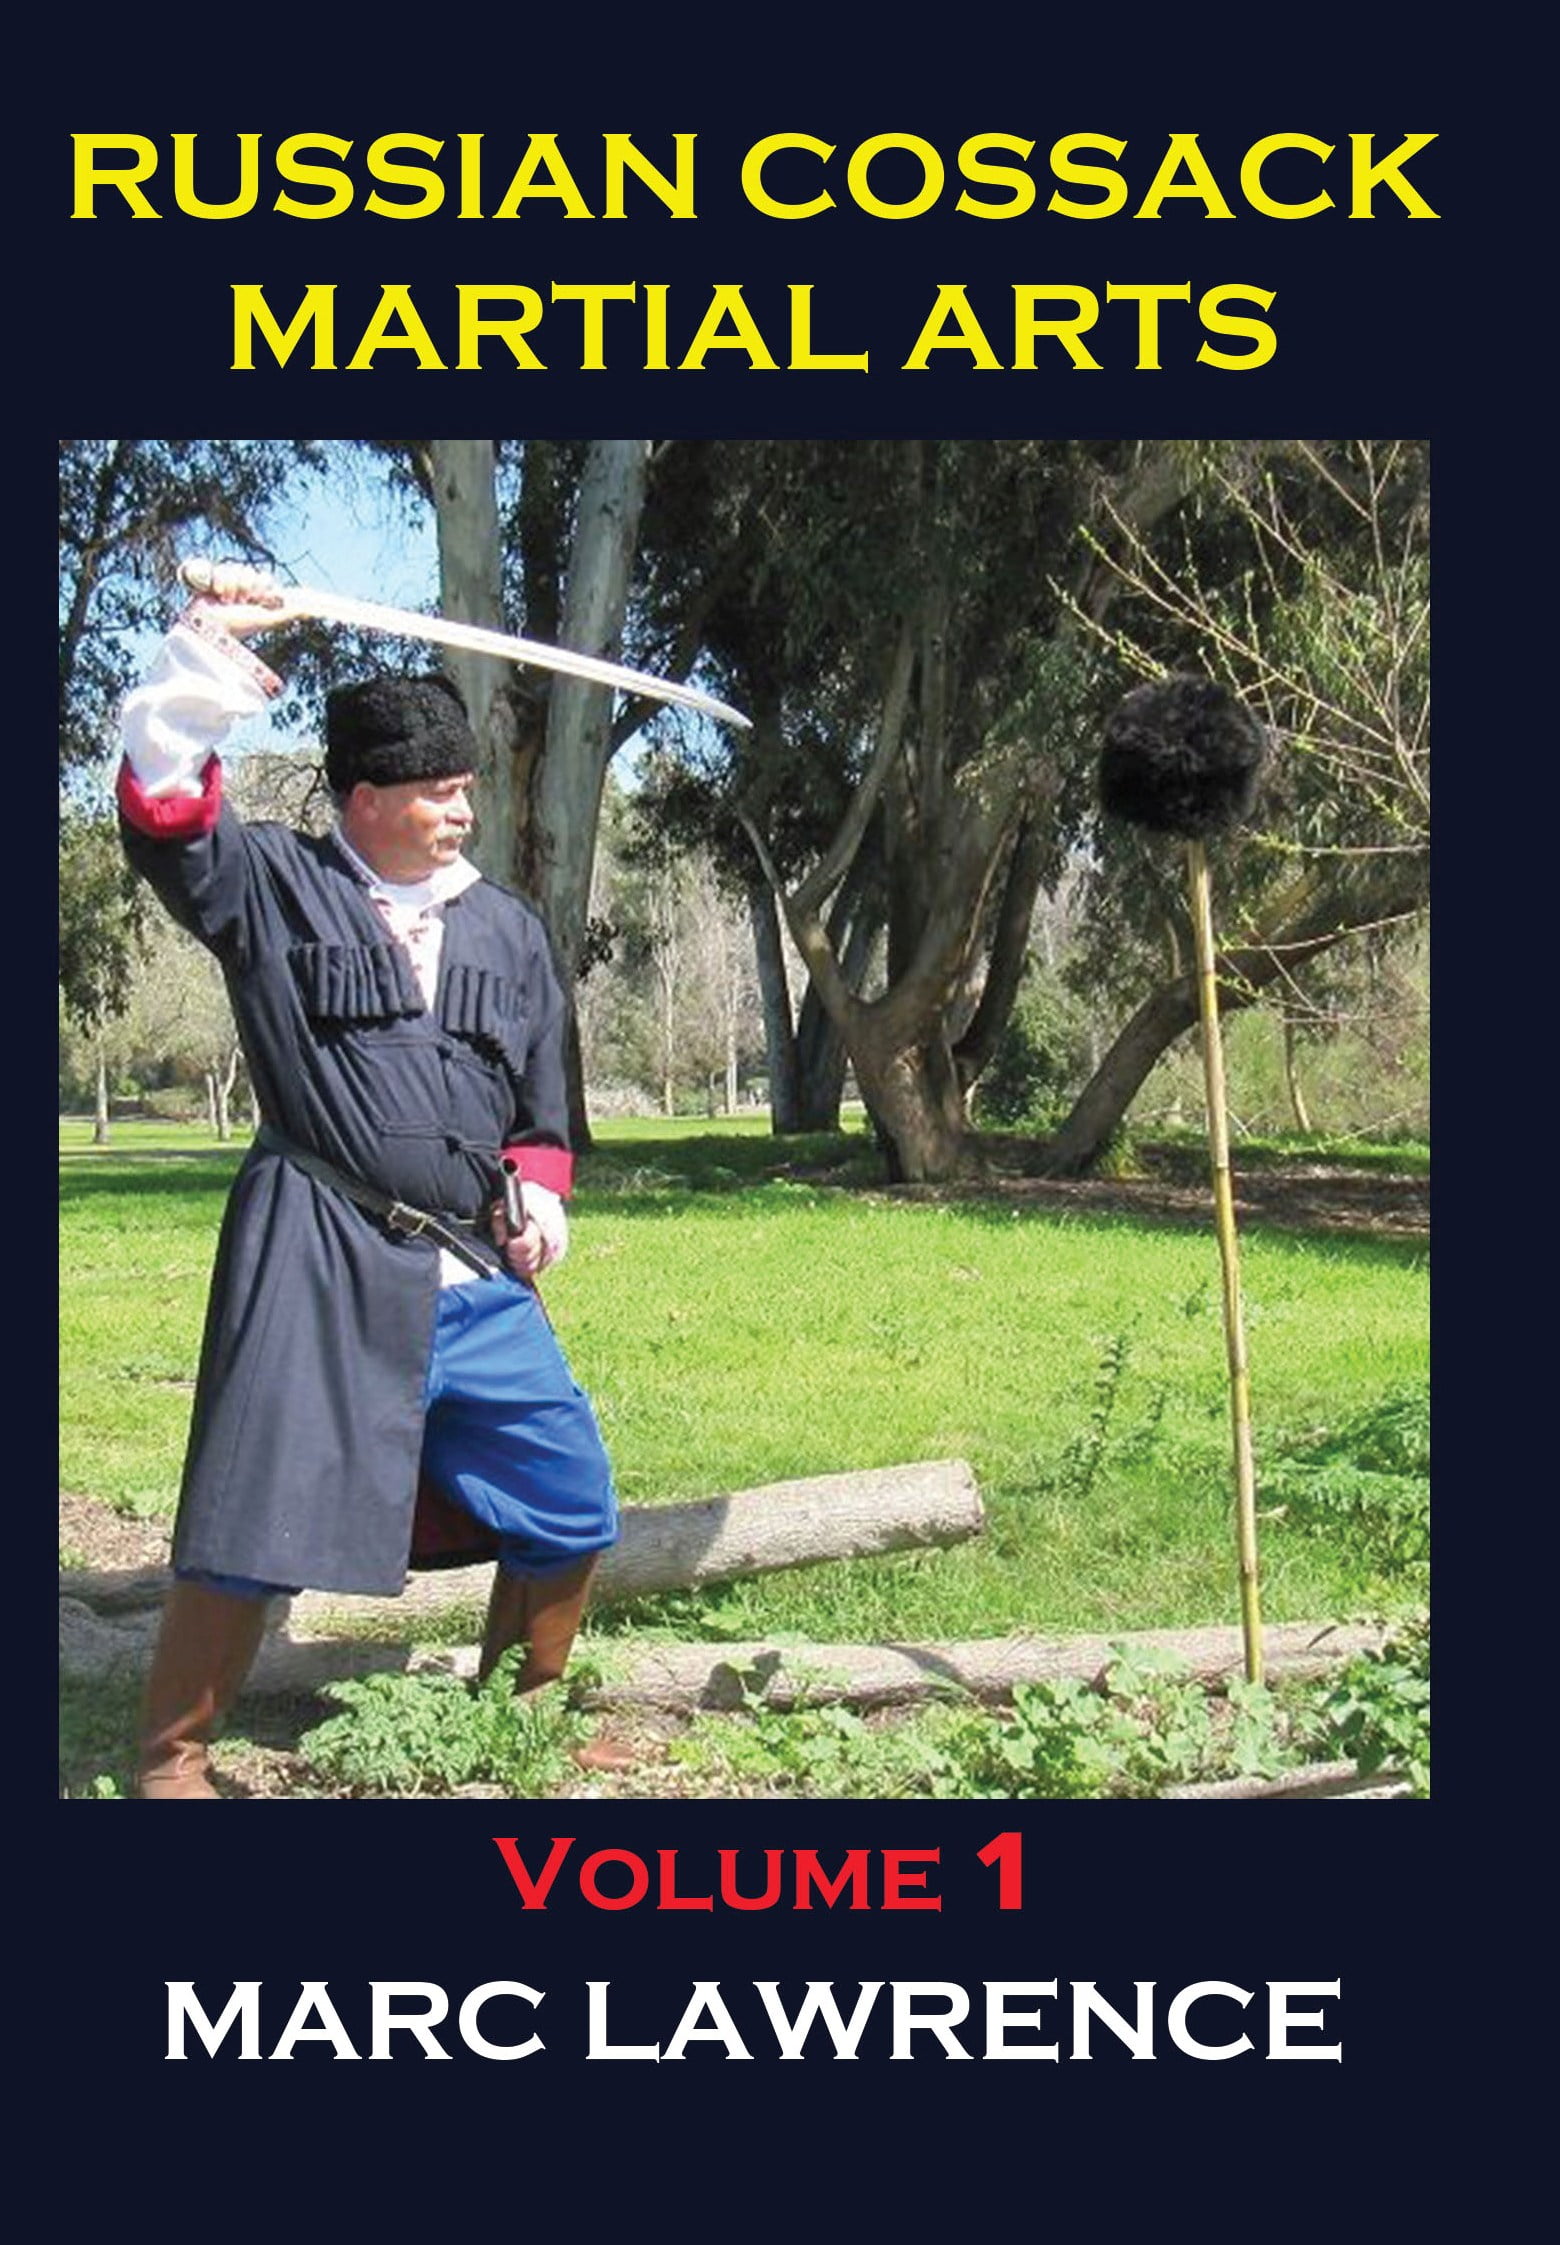 Russian Cossack Martial Arts Training #1 DVD